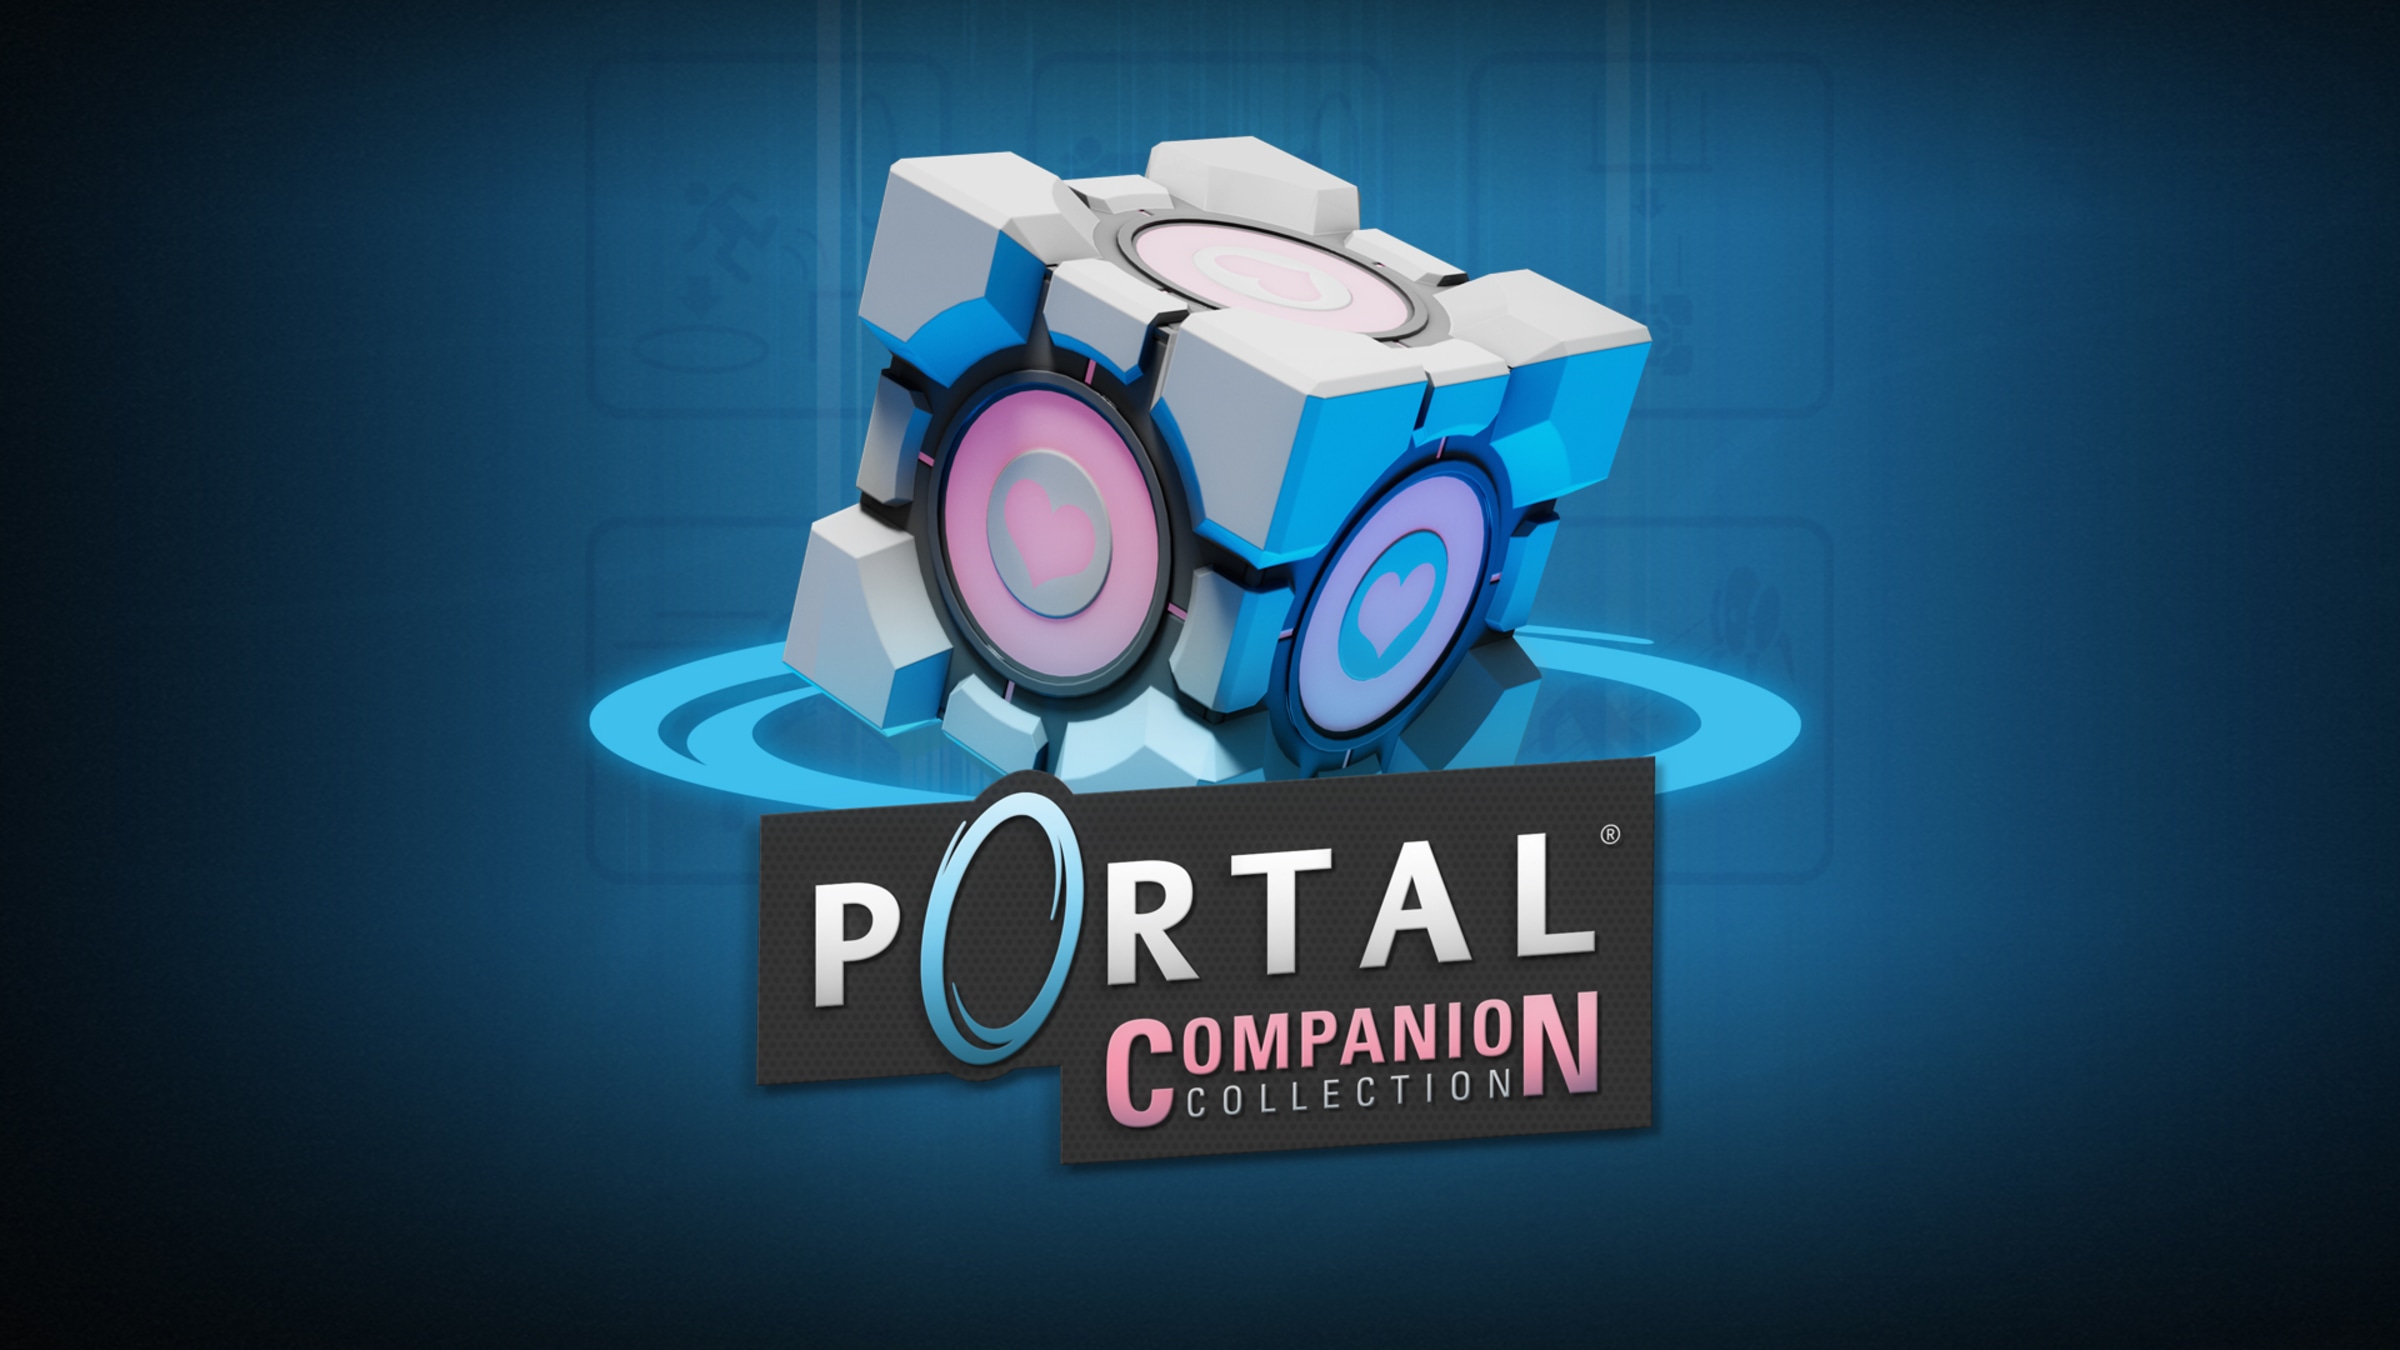 Portal Companion Collection for Nintendo Switch - Nintendo Official Site